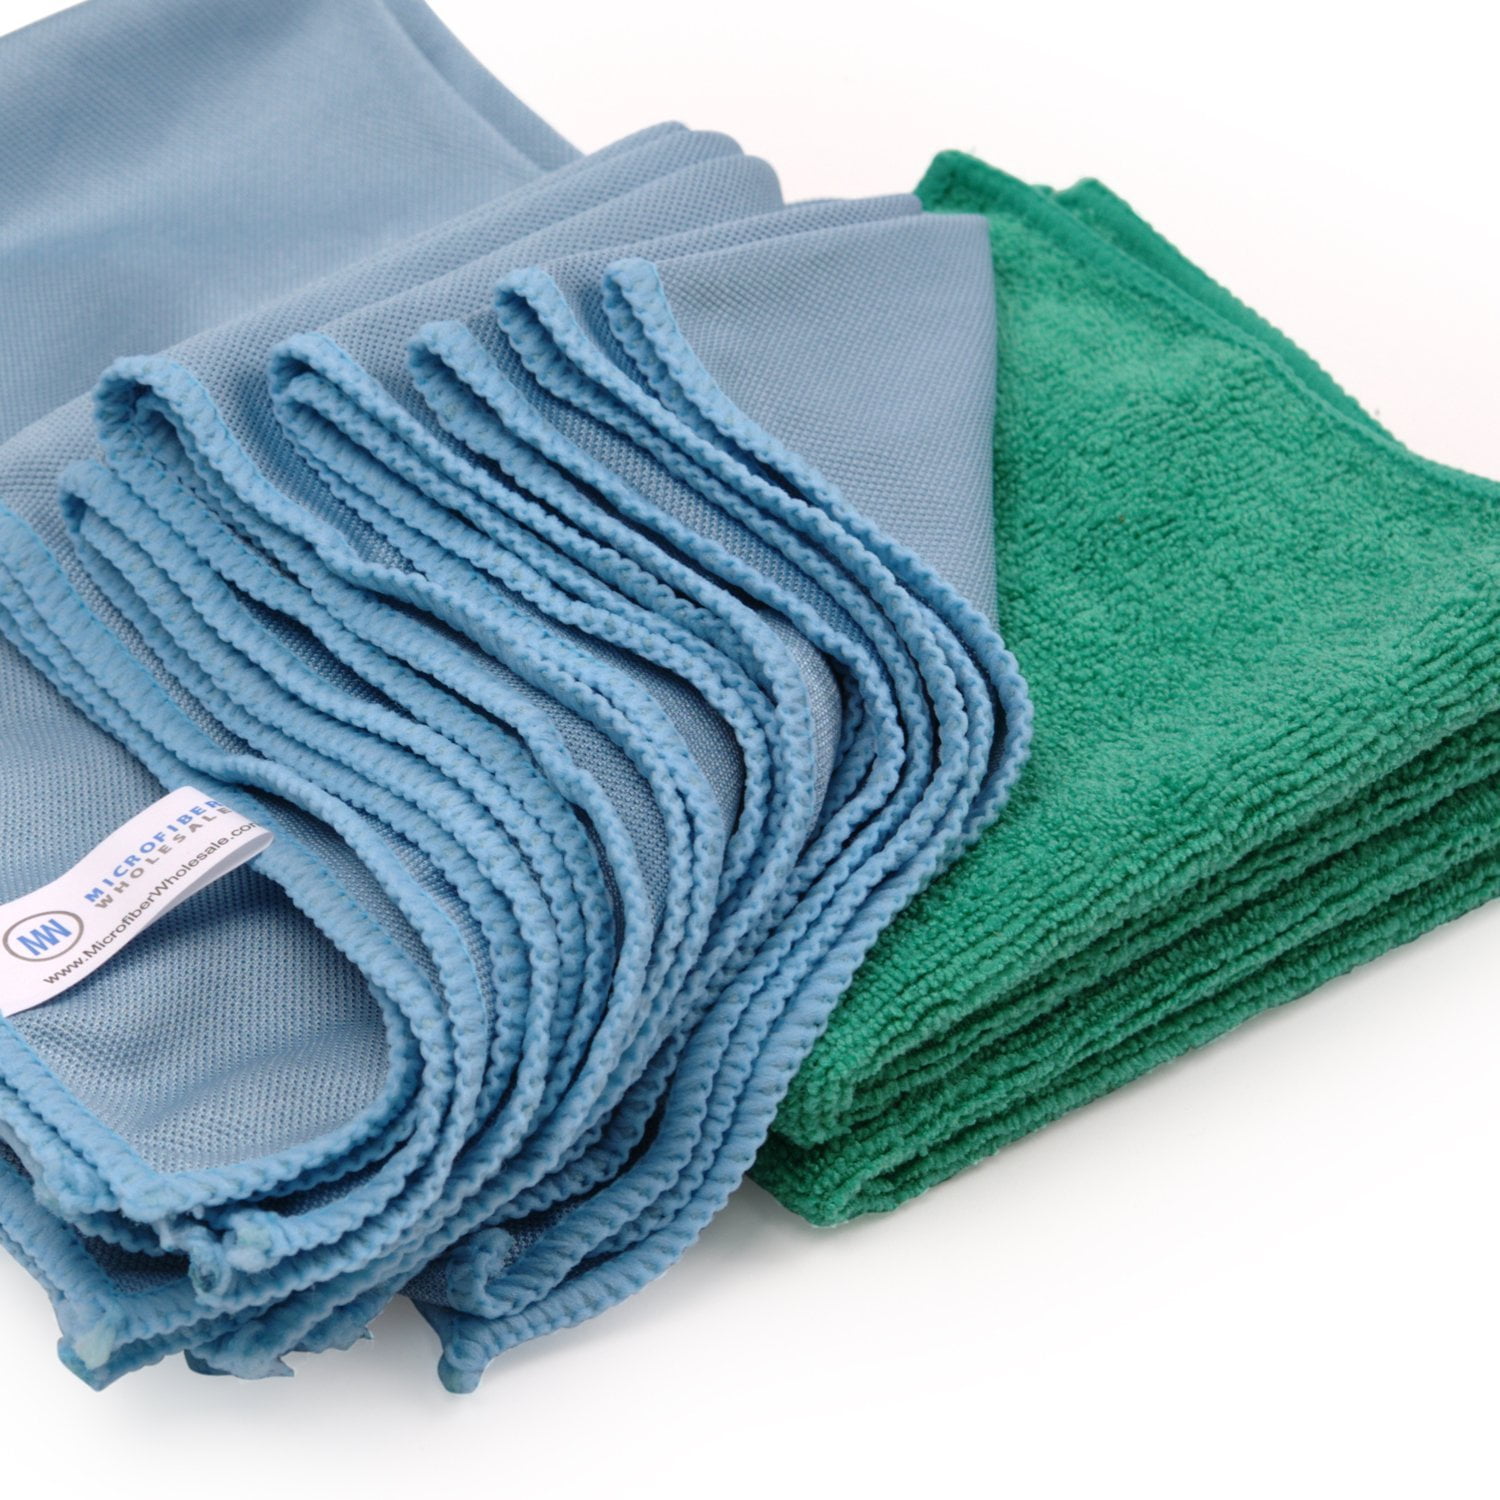 MULTI PURPOSE MICROFIBRE CLOTHS TOWEL for Glass Window Mirror Dust Clean Wipe 